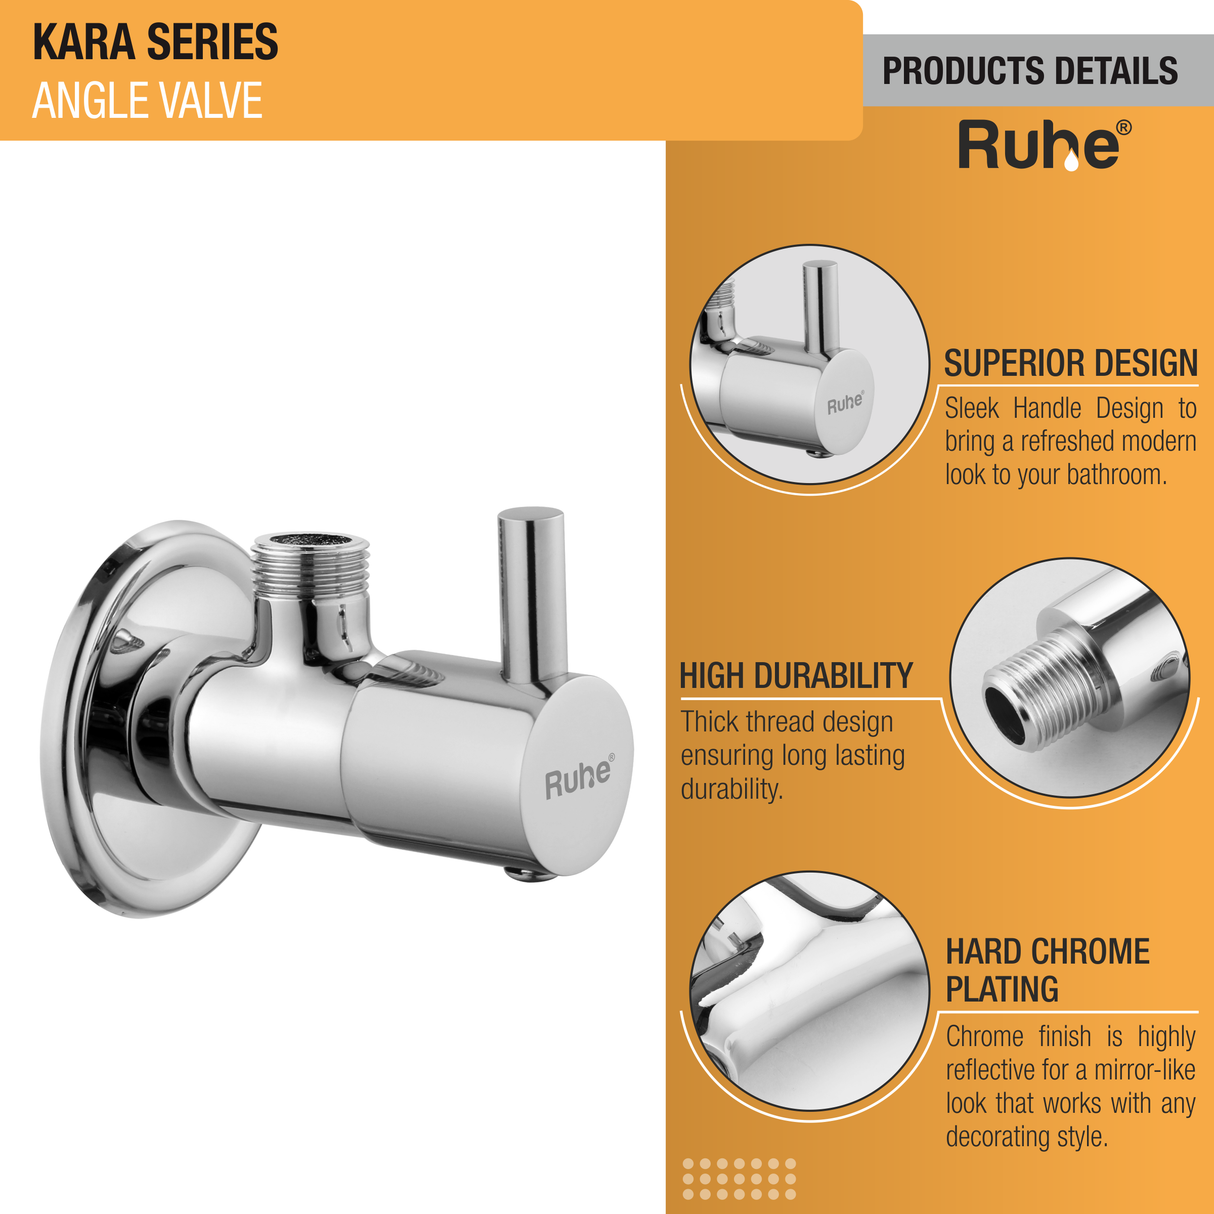 Kara Angle Valve Brass Faucet product details